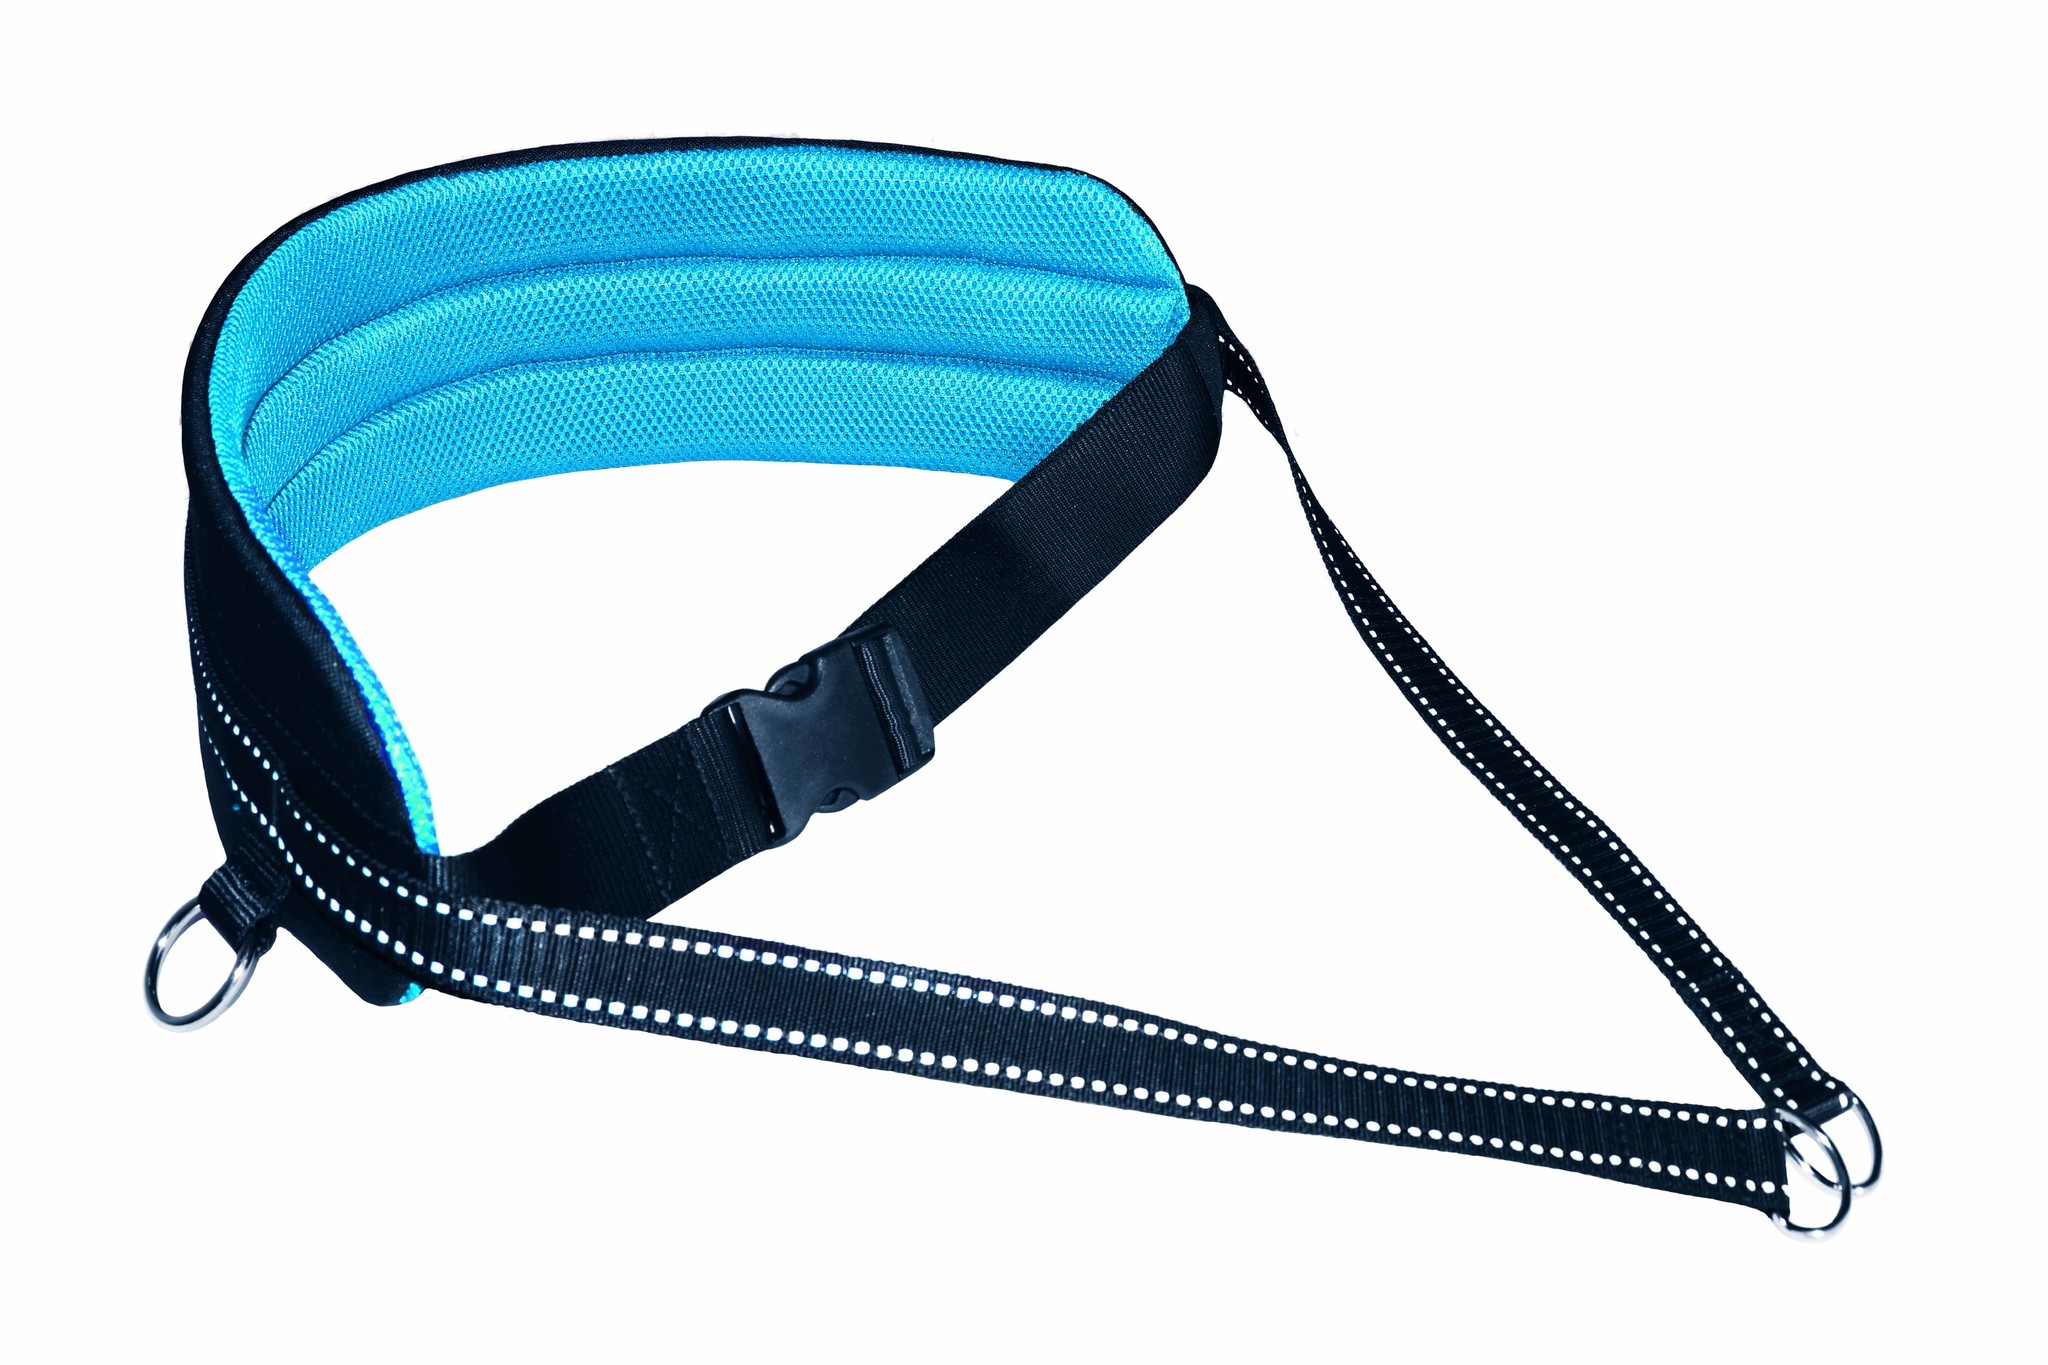 LASALINE LASALINE Handsfree Canicross dog walking running jogging waist belt -  light blue